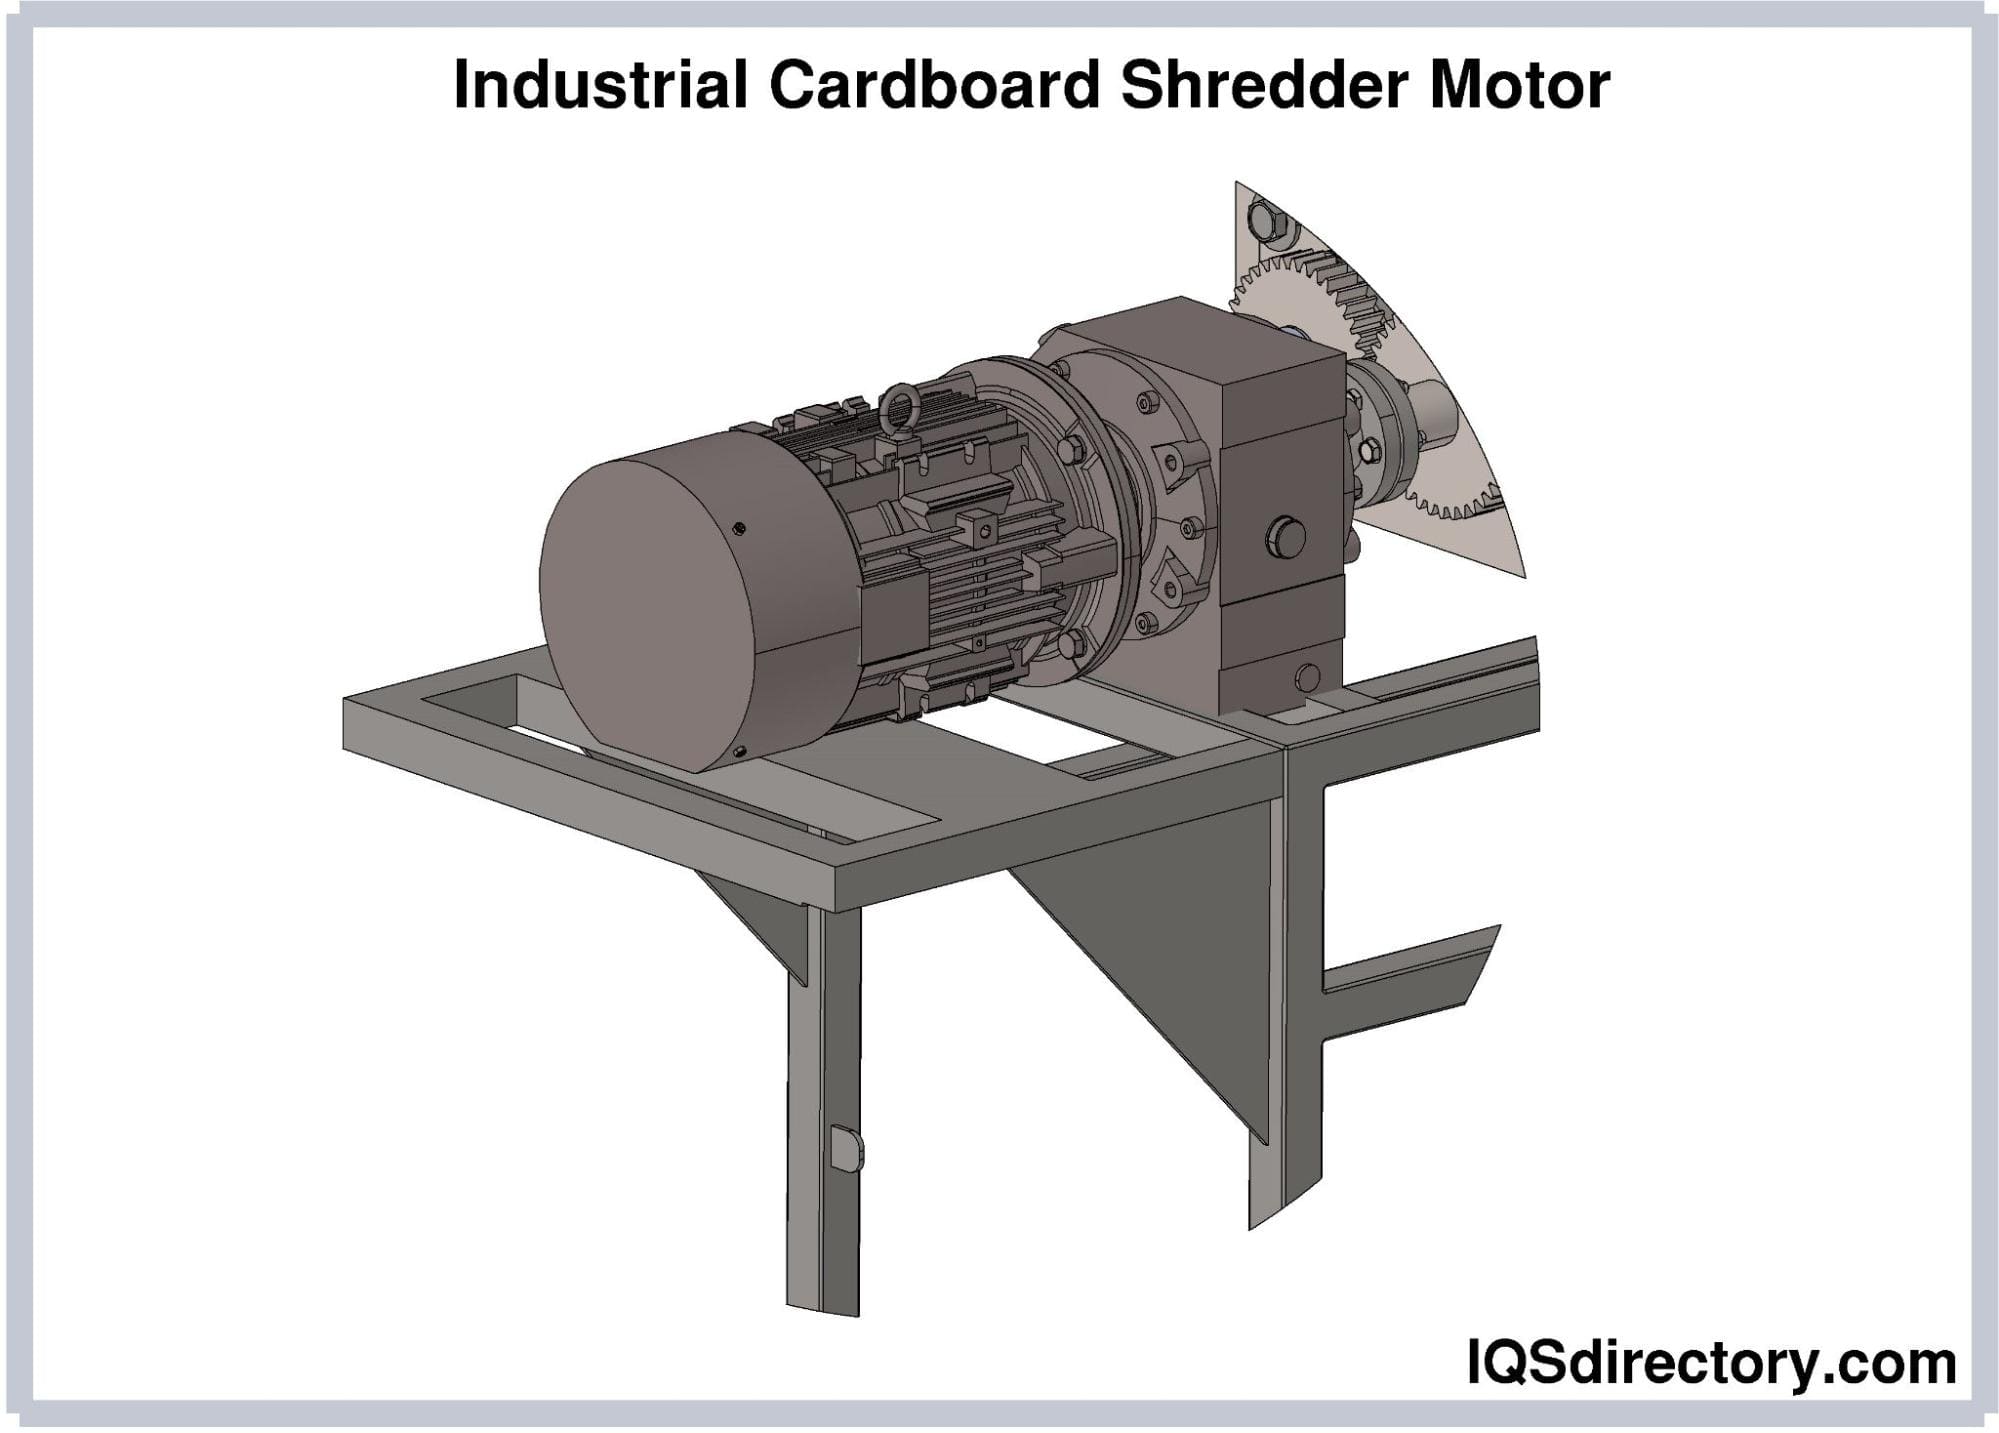 Cardboard Perforator